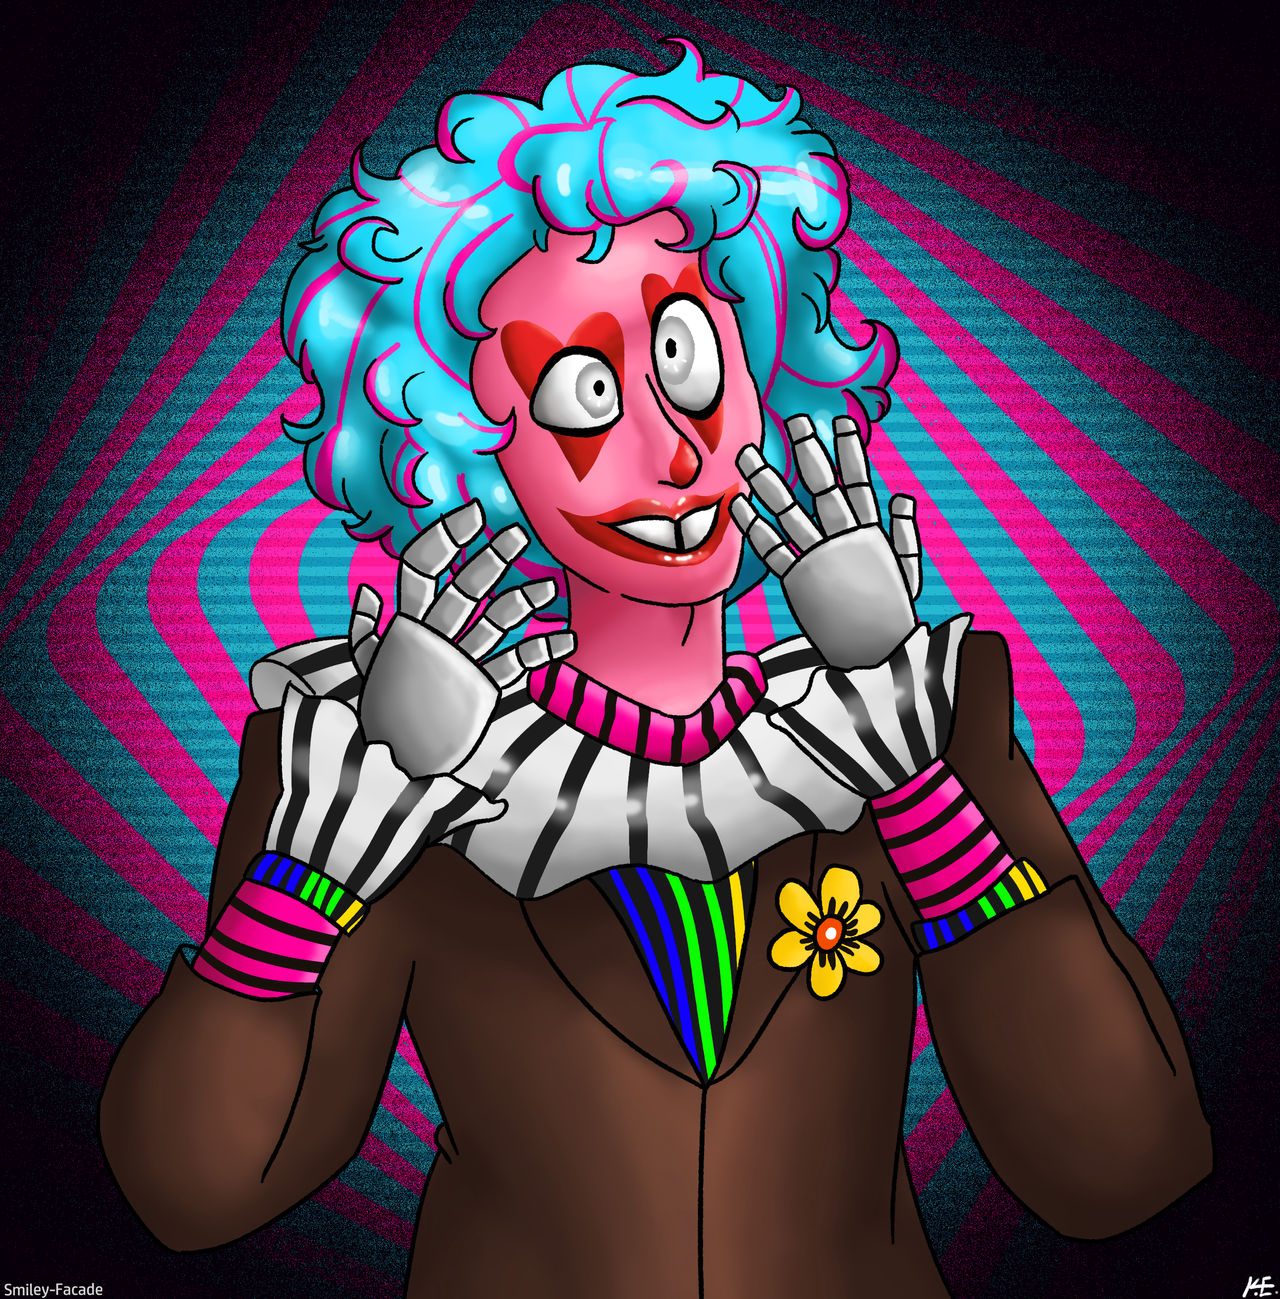 Blah Blah The Clown by The-Smileyy on DeviantArt